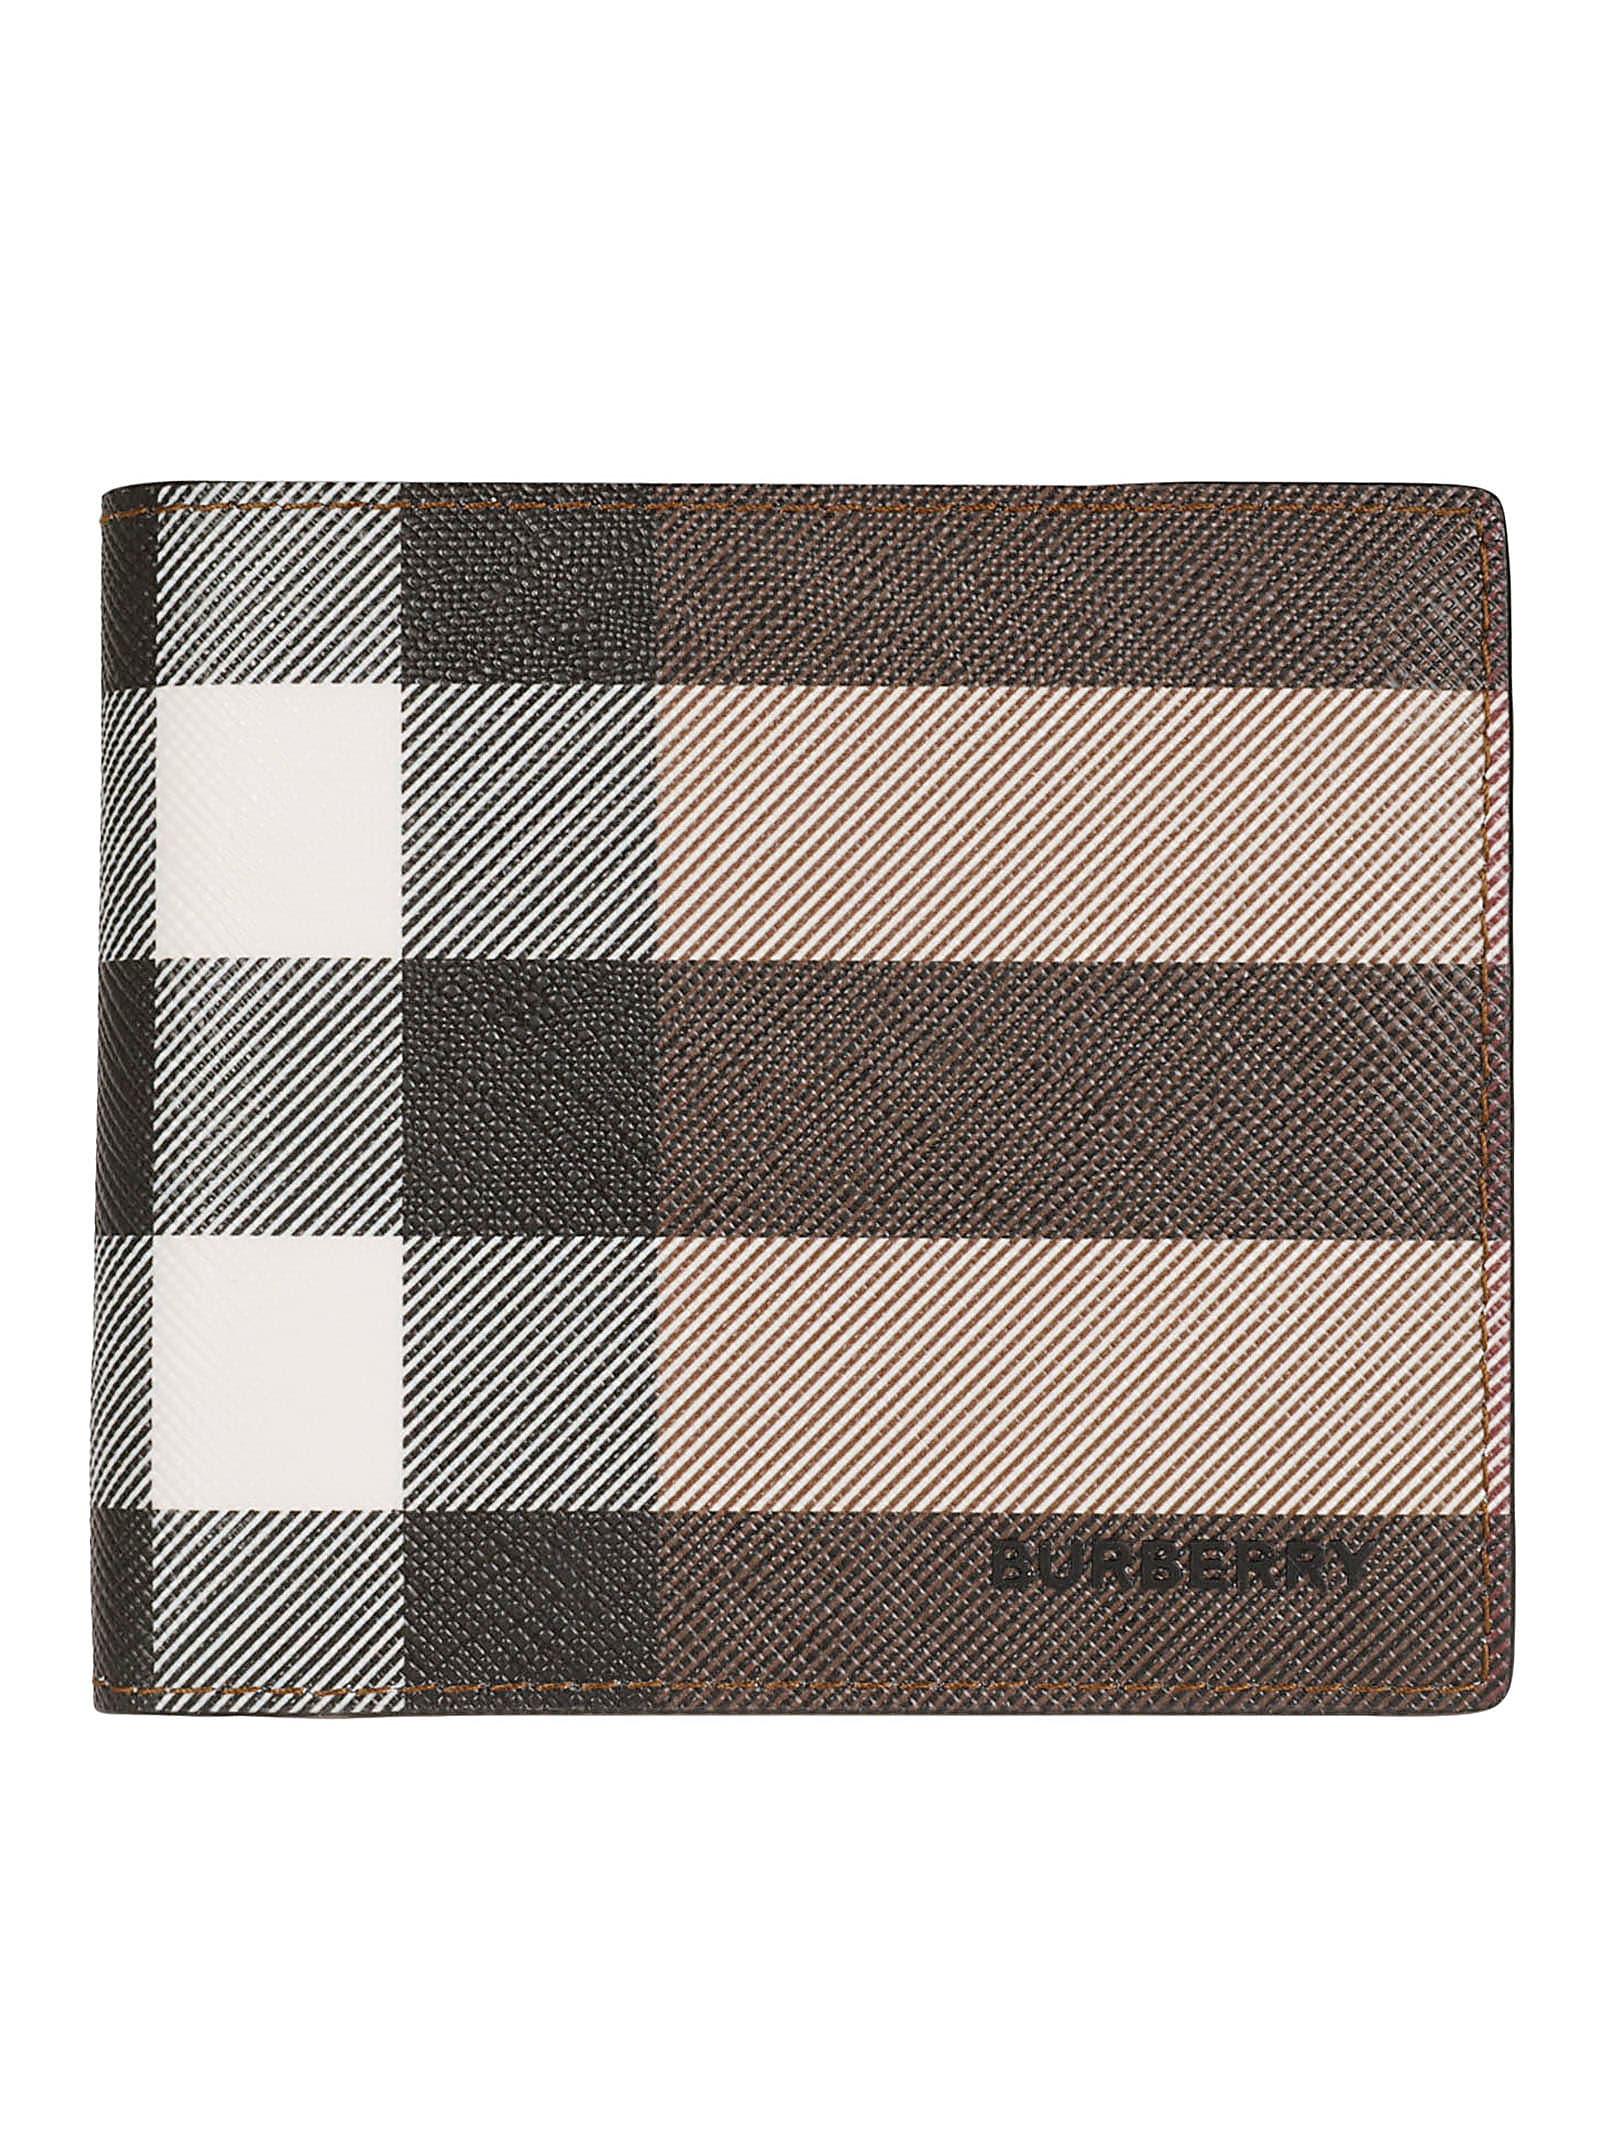 Burberry Regular Cc Bill Giant Check Wallet